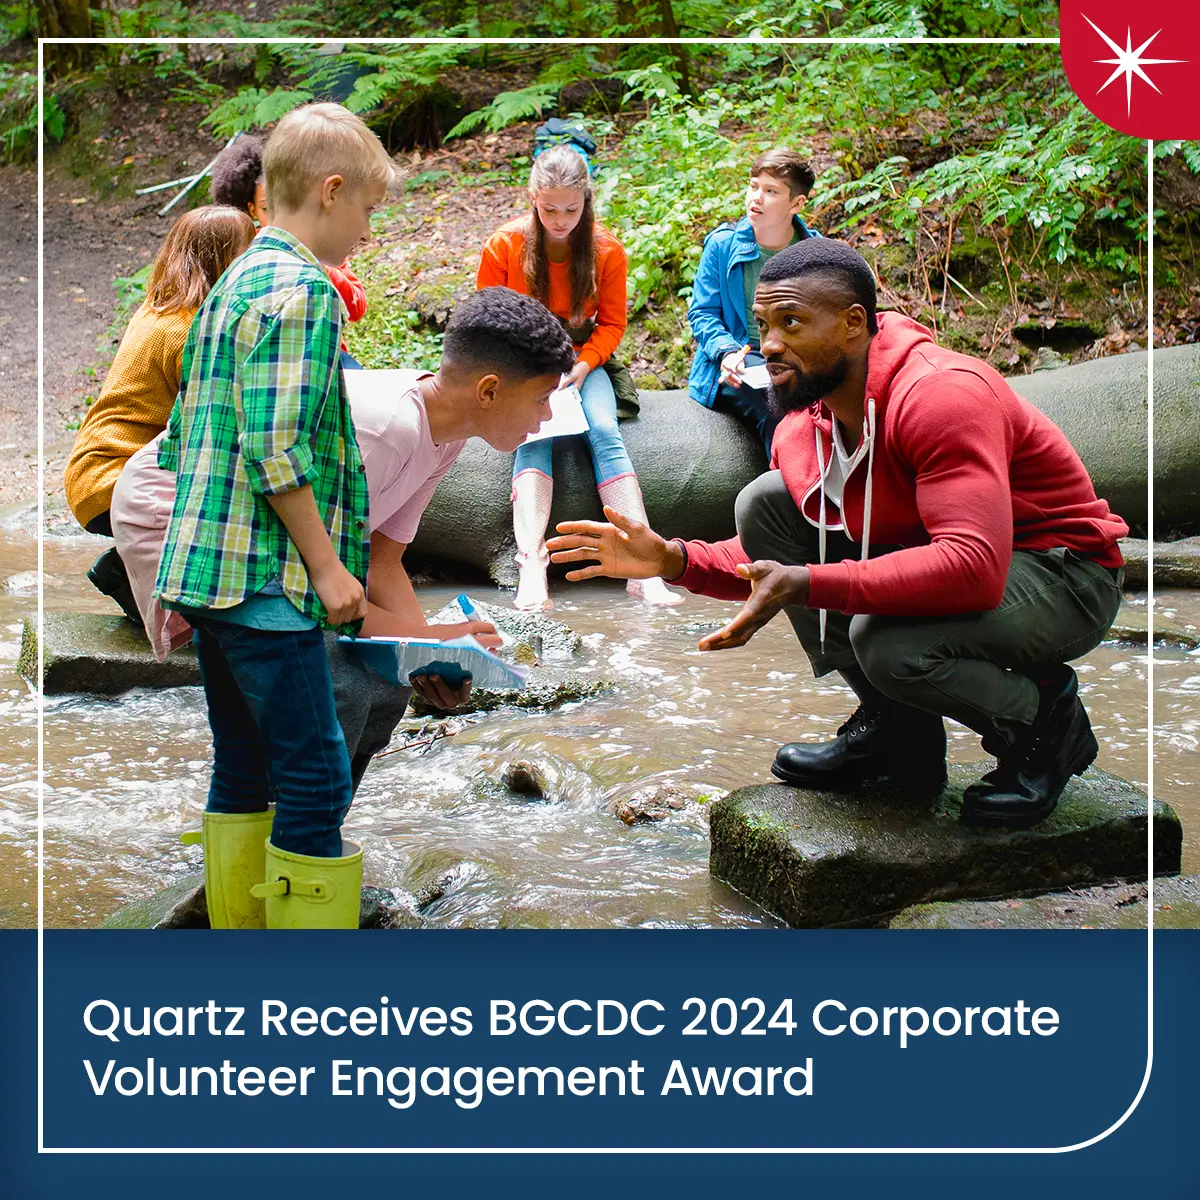 Quartz Receives BGCDC 2024 Corporate Volunteer Engagement Award